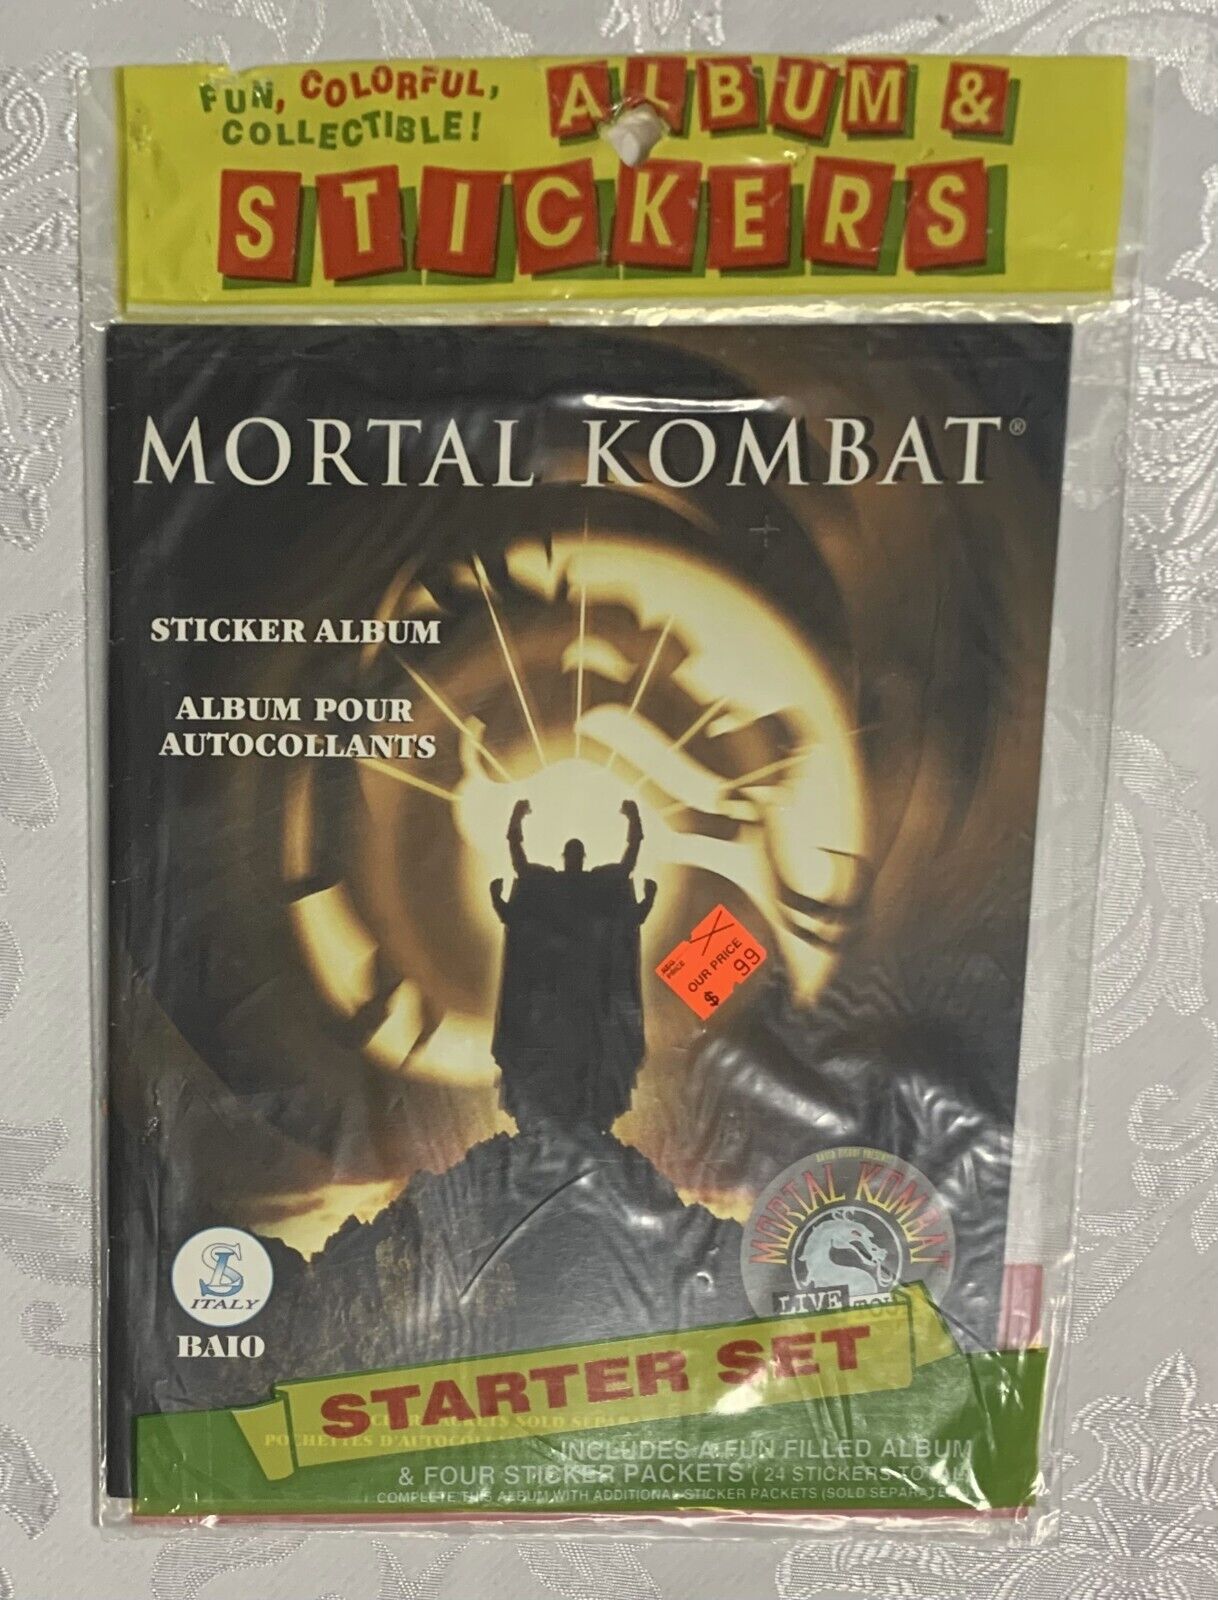 Mortal Kombat 1995 Baio Sticker Album with 4 Packs of Stickers, New Sealed